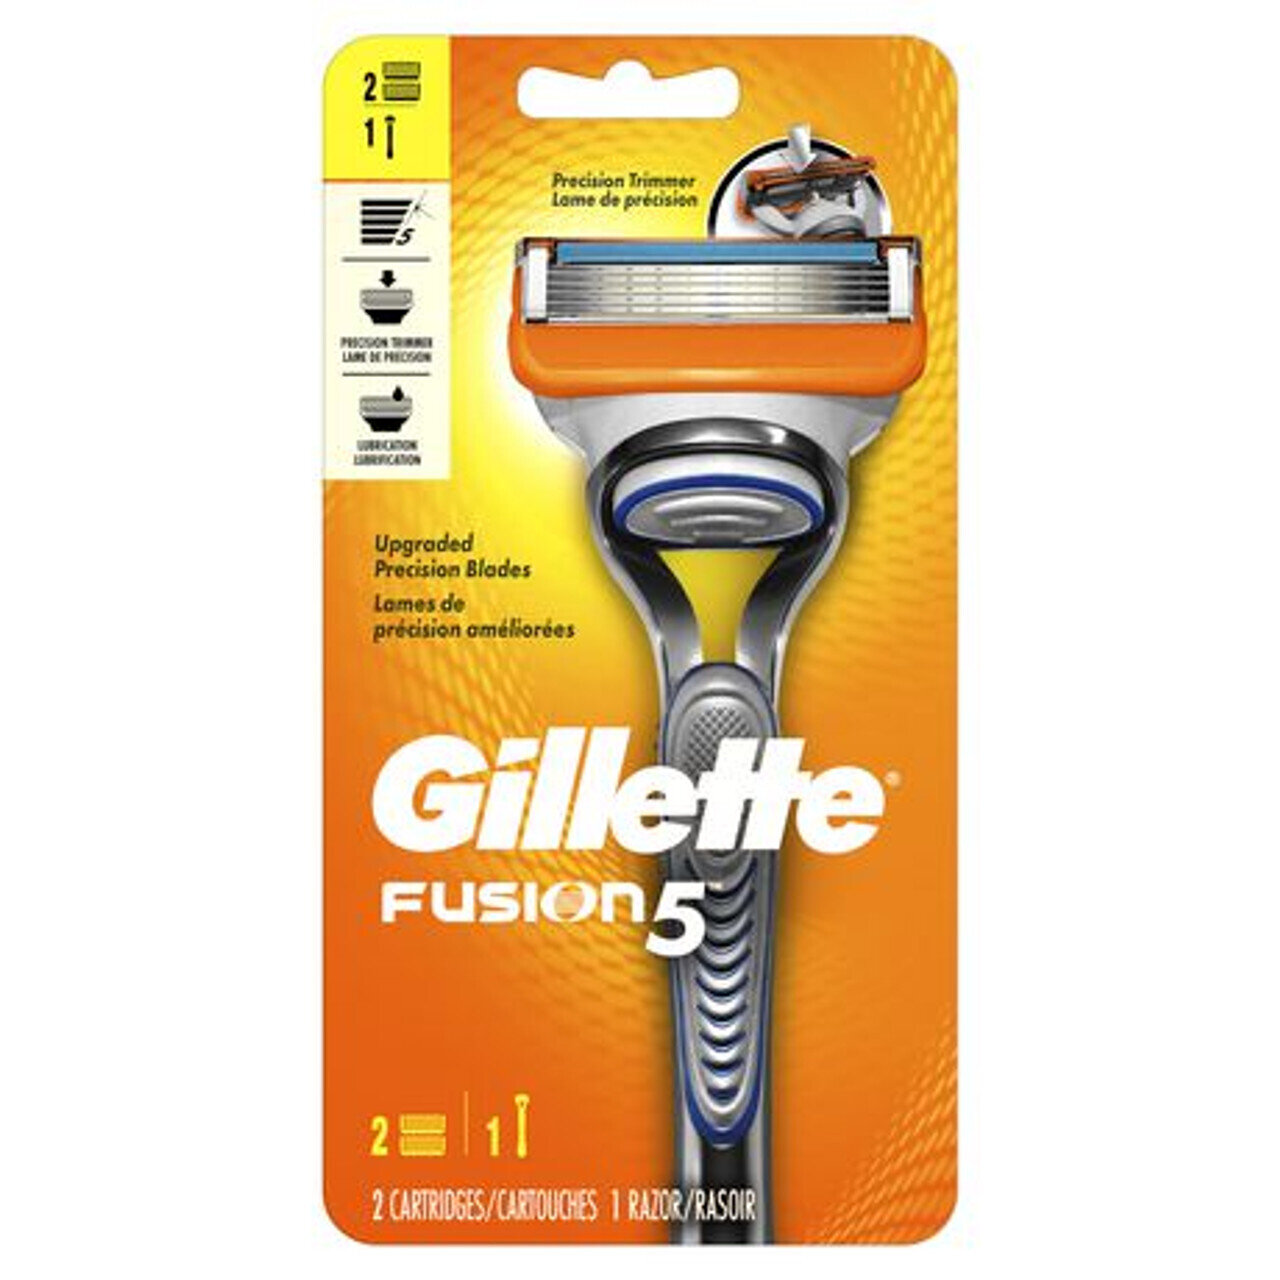 Gillette Fusion 5 Razor 2 Cartridges + 1 Razor